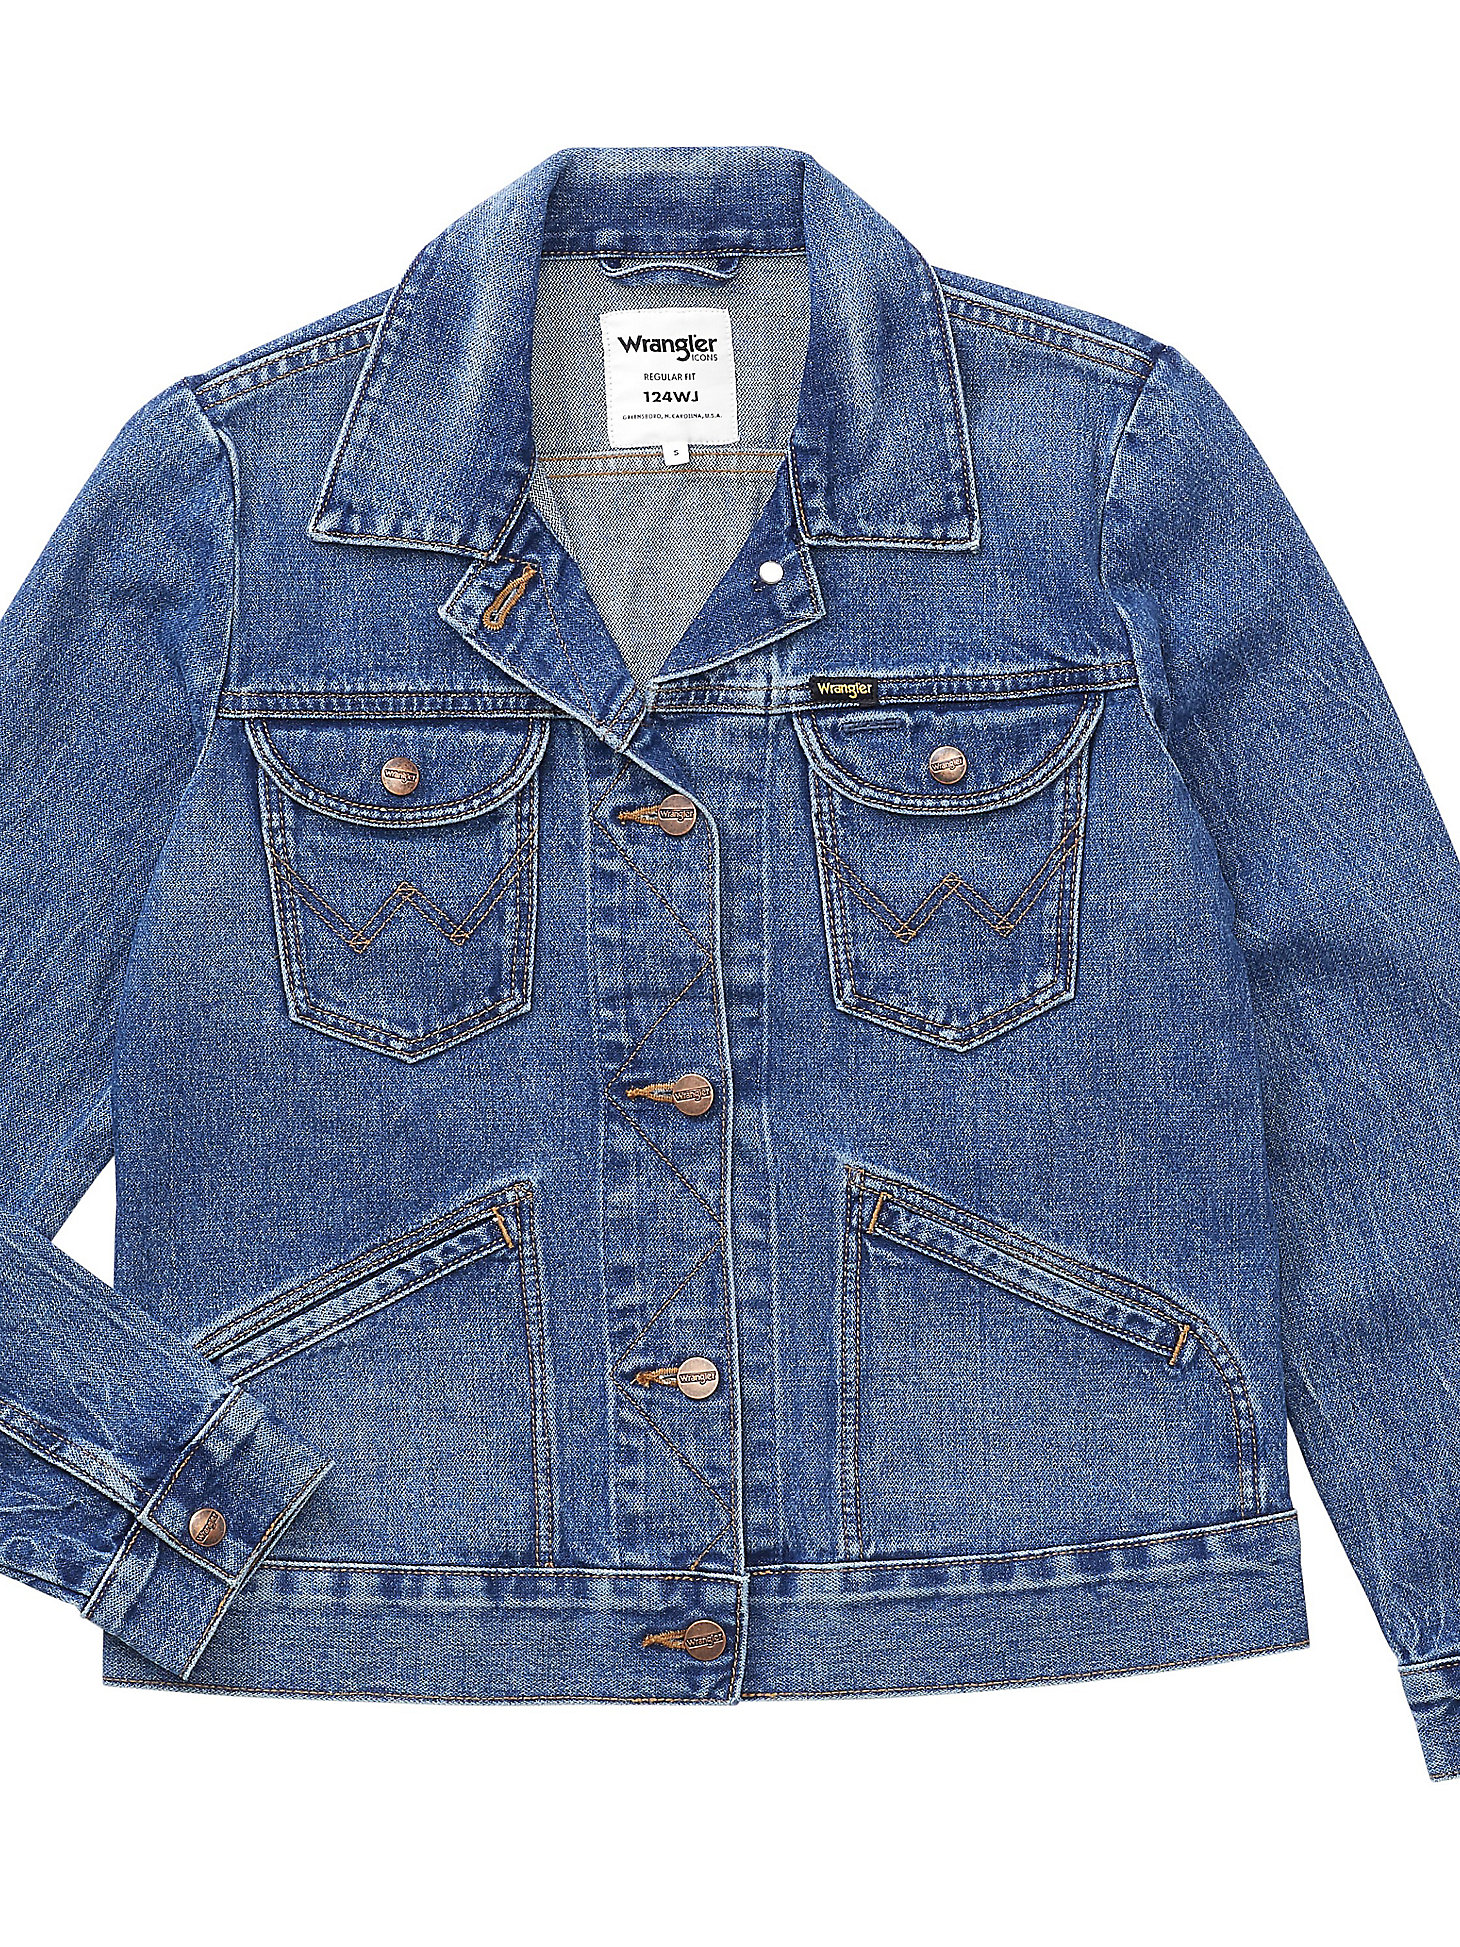 Wrangler ICONS™  124WJ Women's Denim Jacket in 3 Year Wash alternative view 7